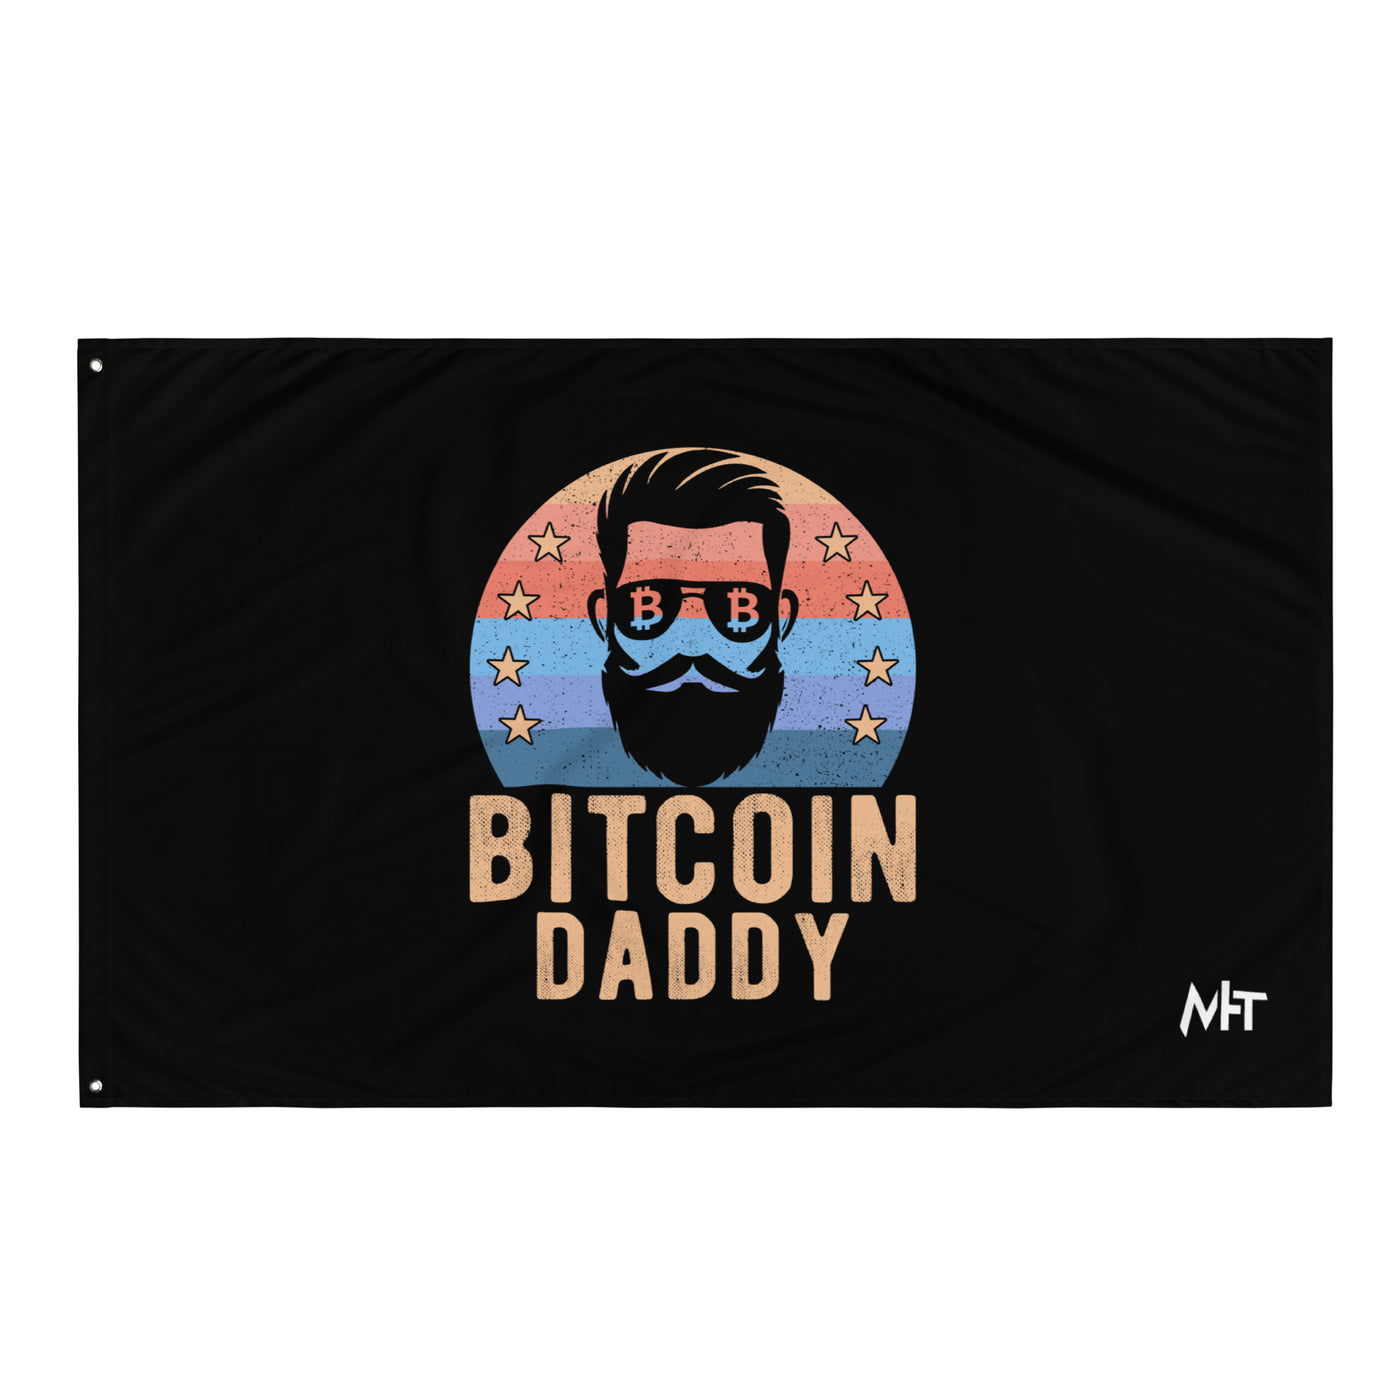 Bitcoin Daddy - Flag